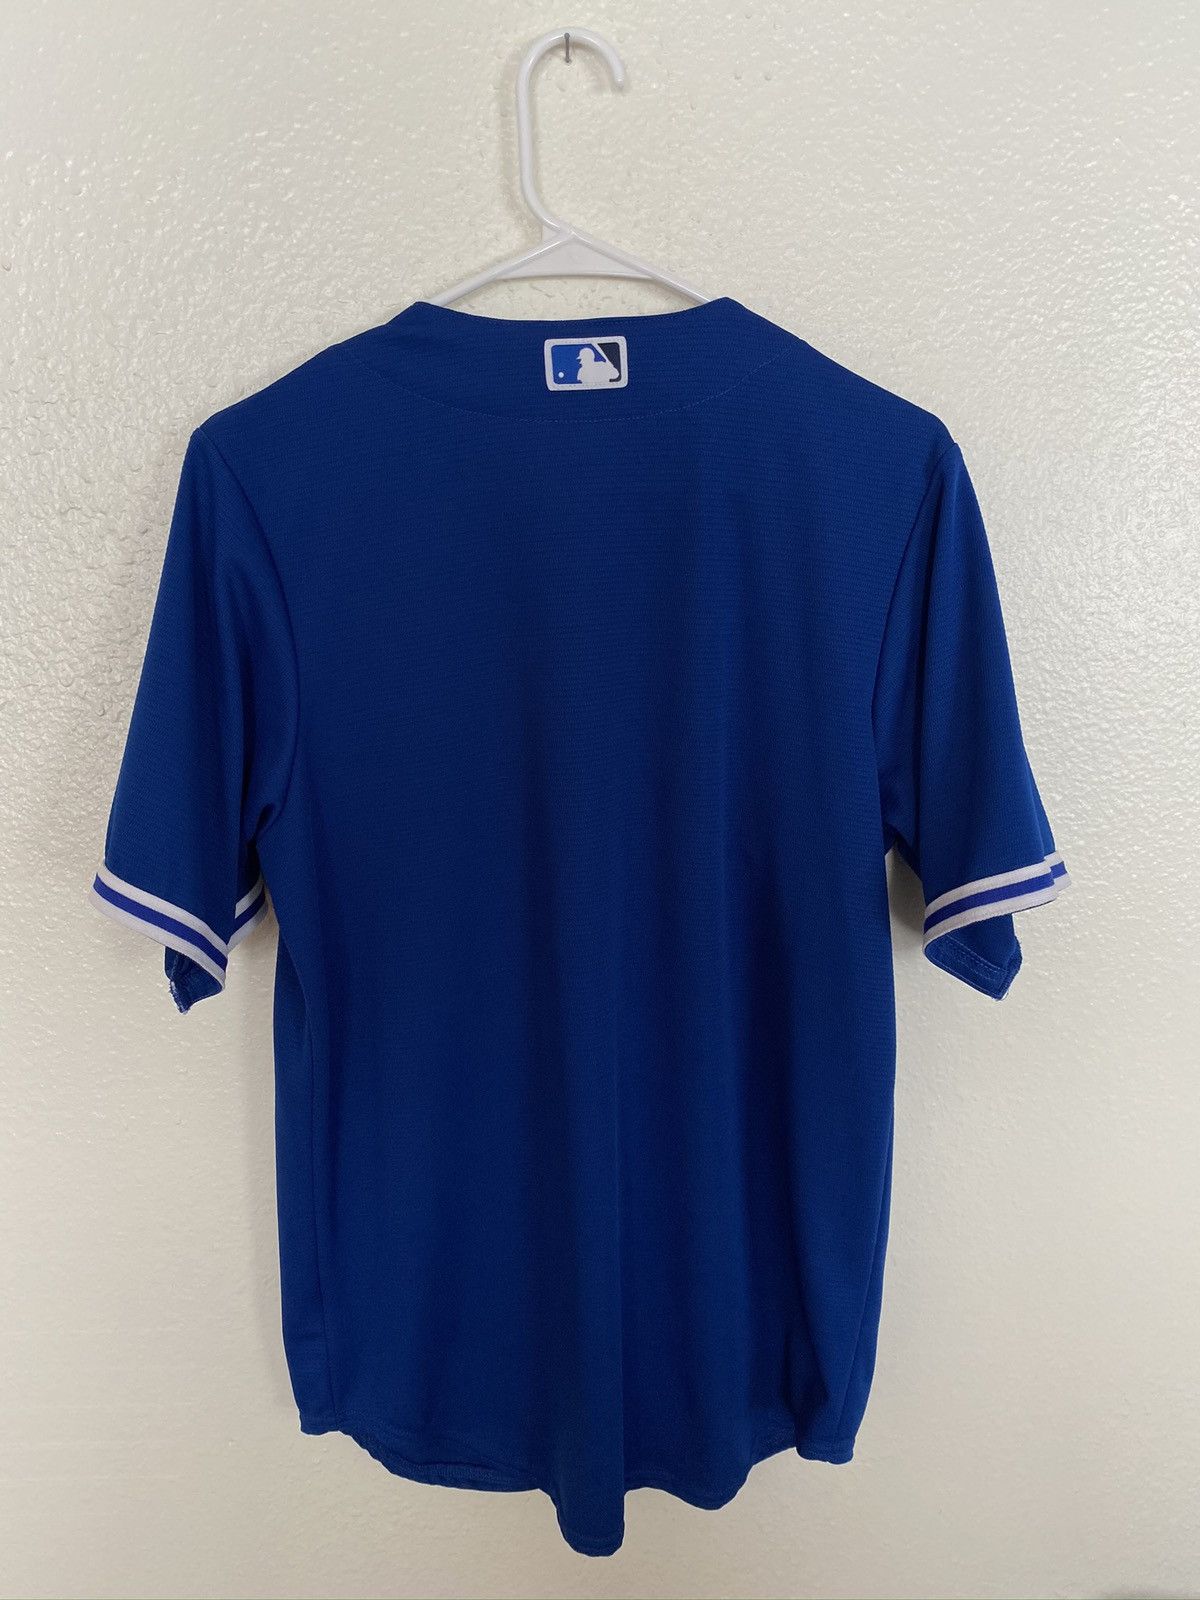 Majestic Blue jays MLB jersey Size US S / EU 44-46 / 1 - 3 Preview